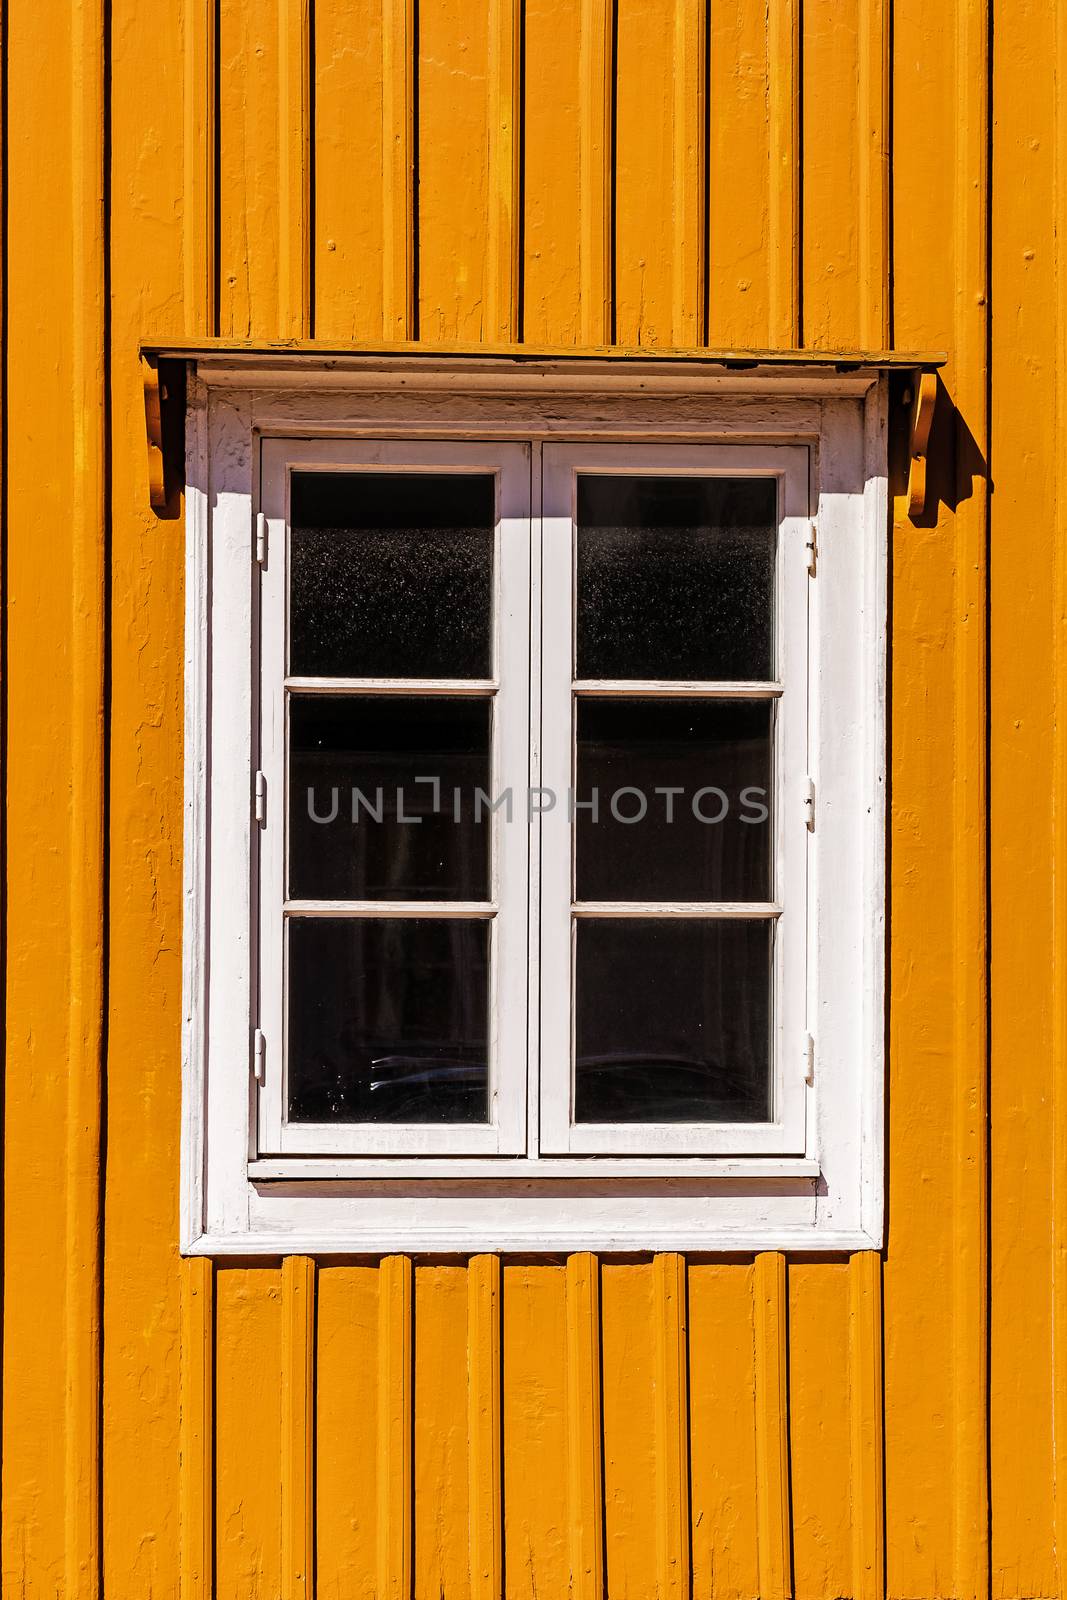 Window on a wooden facade by pawel_szczepanski